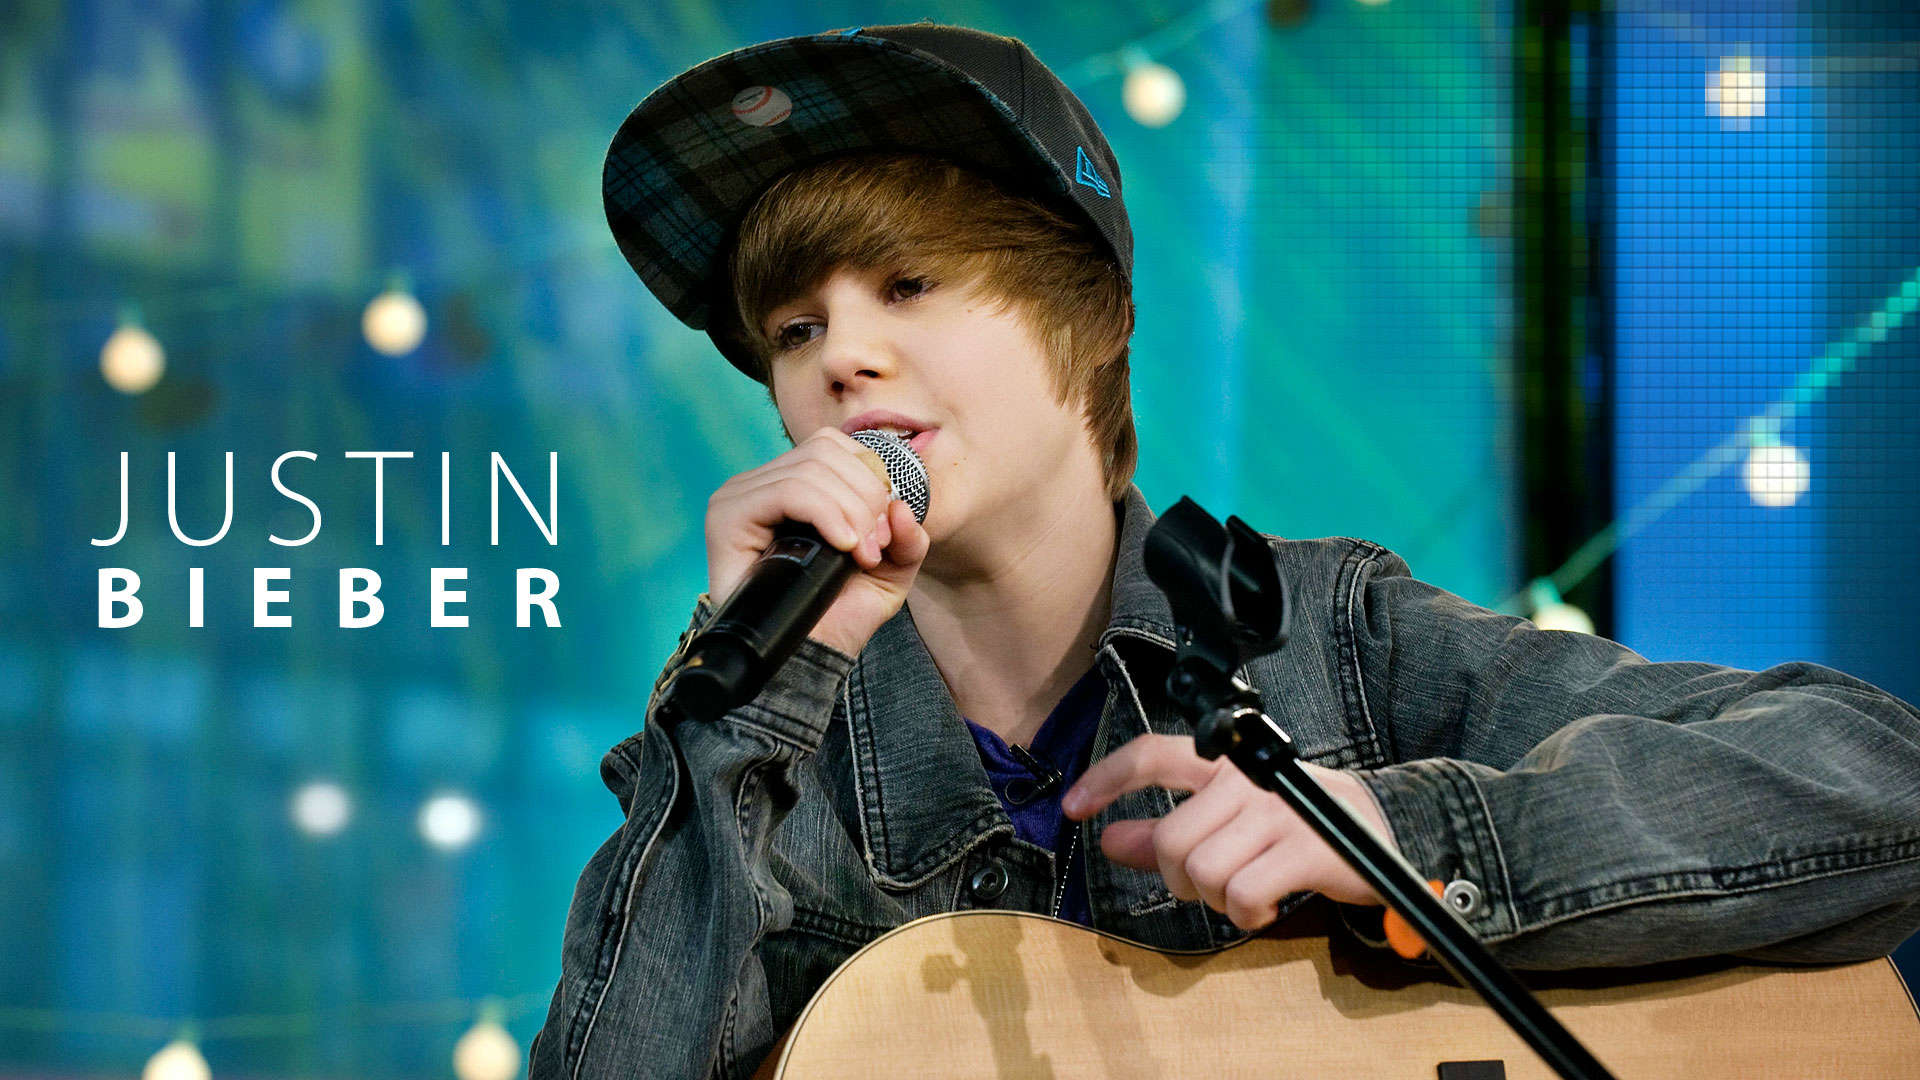 Justin Bieber Wallpapers 2012 Free Download - Full Hd Justin Bieber Wallpaper 2018 - HD Wallpaper 